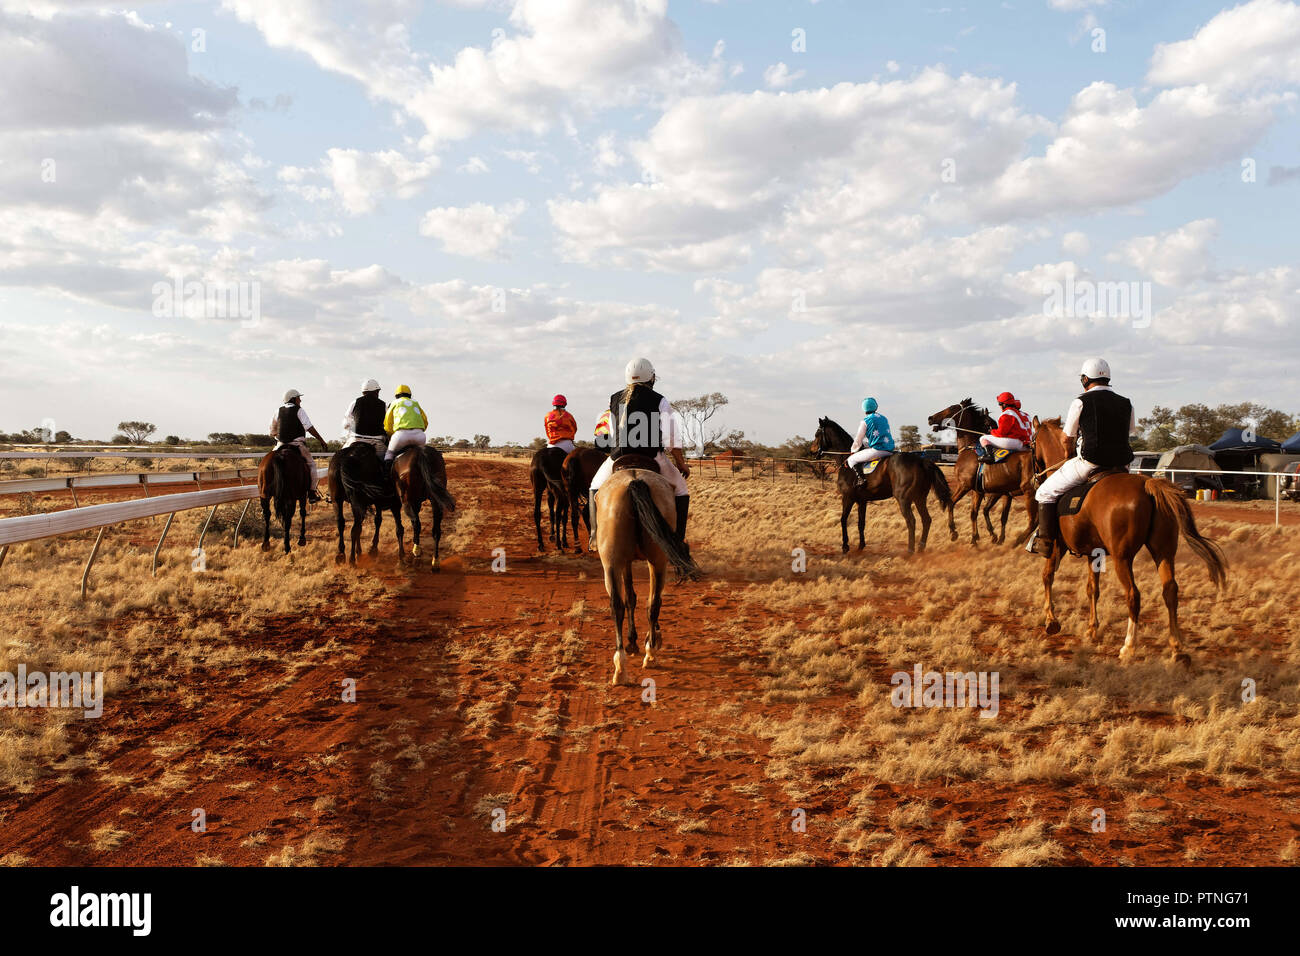 The 97th running of the annual bush races at Landor,,1000km north of Perth, Australia. Stock Photo